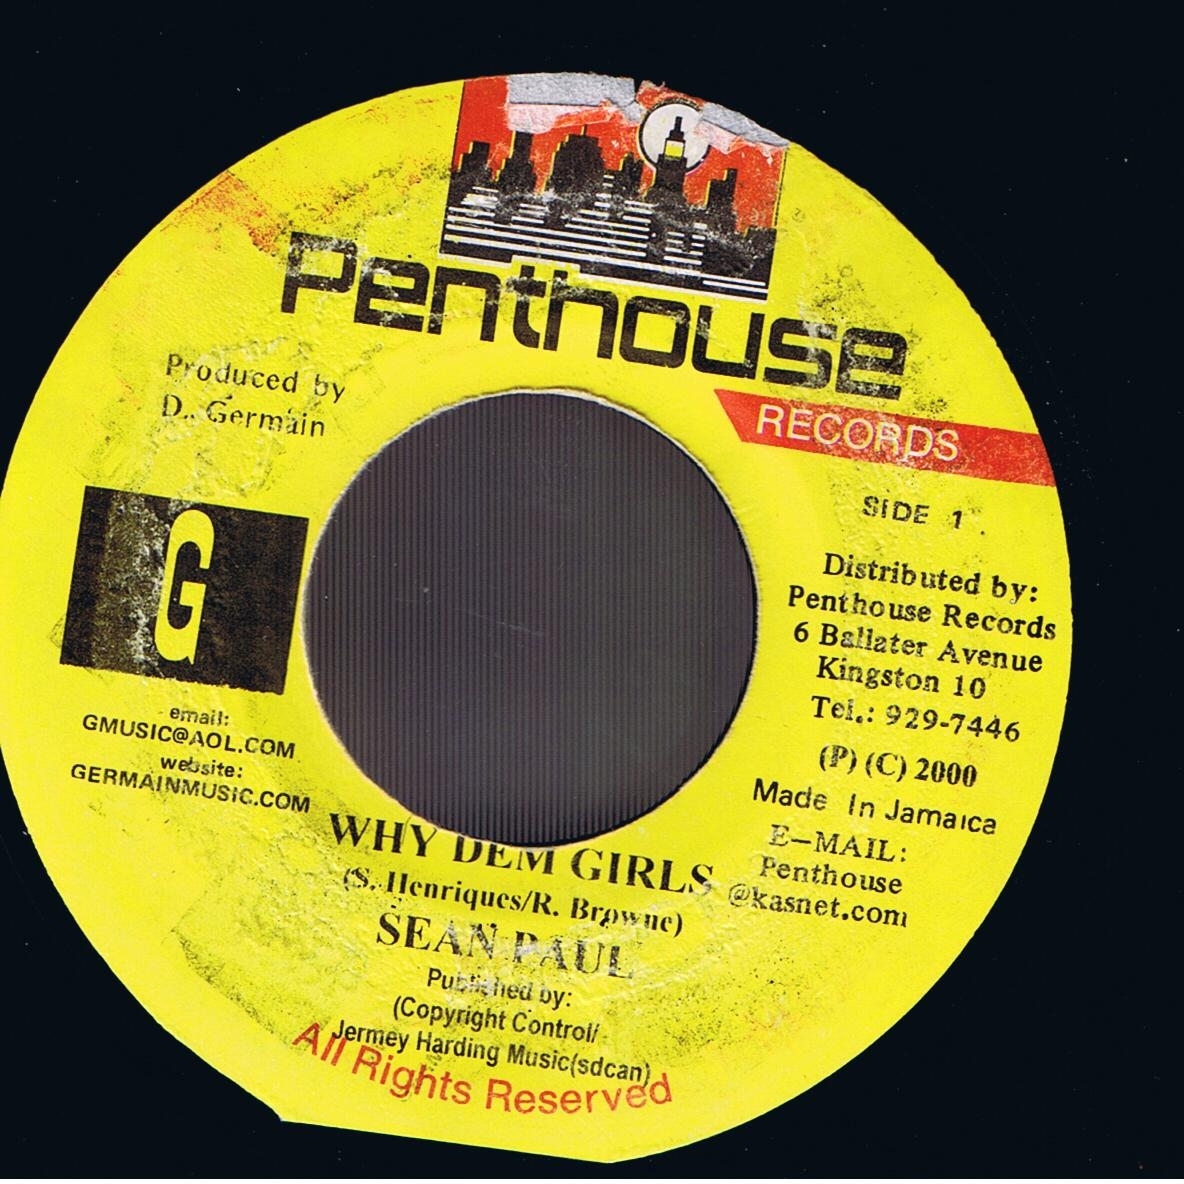 Sean Paul - Why Dem Girls / Version (7")